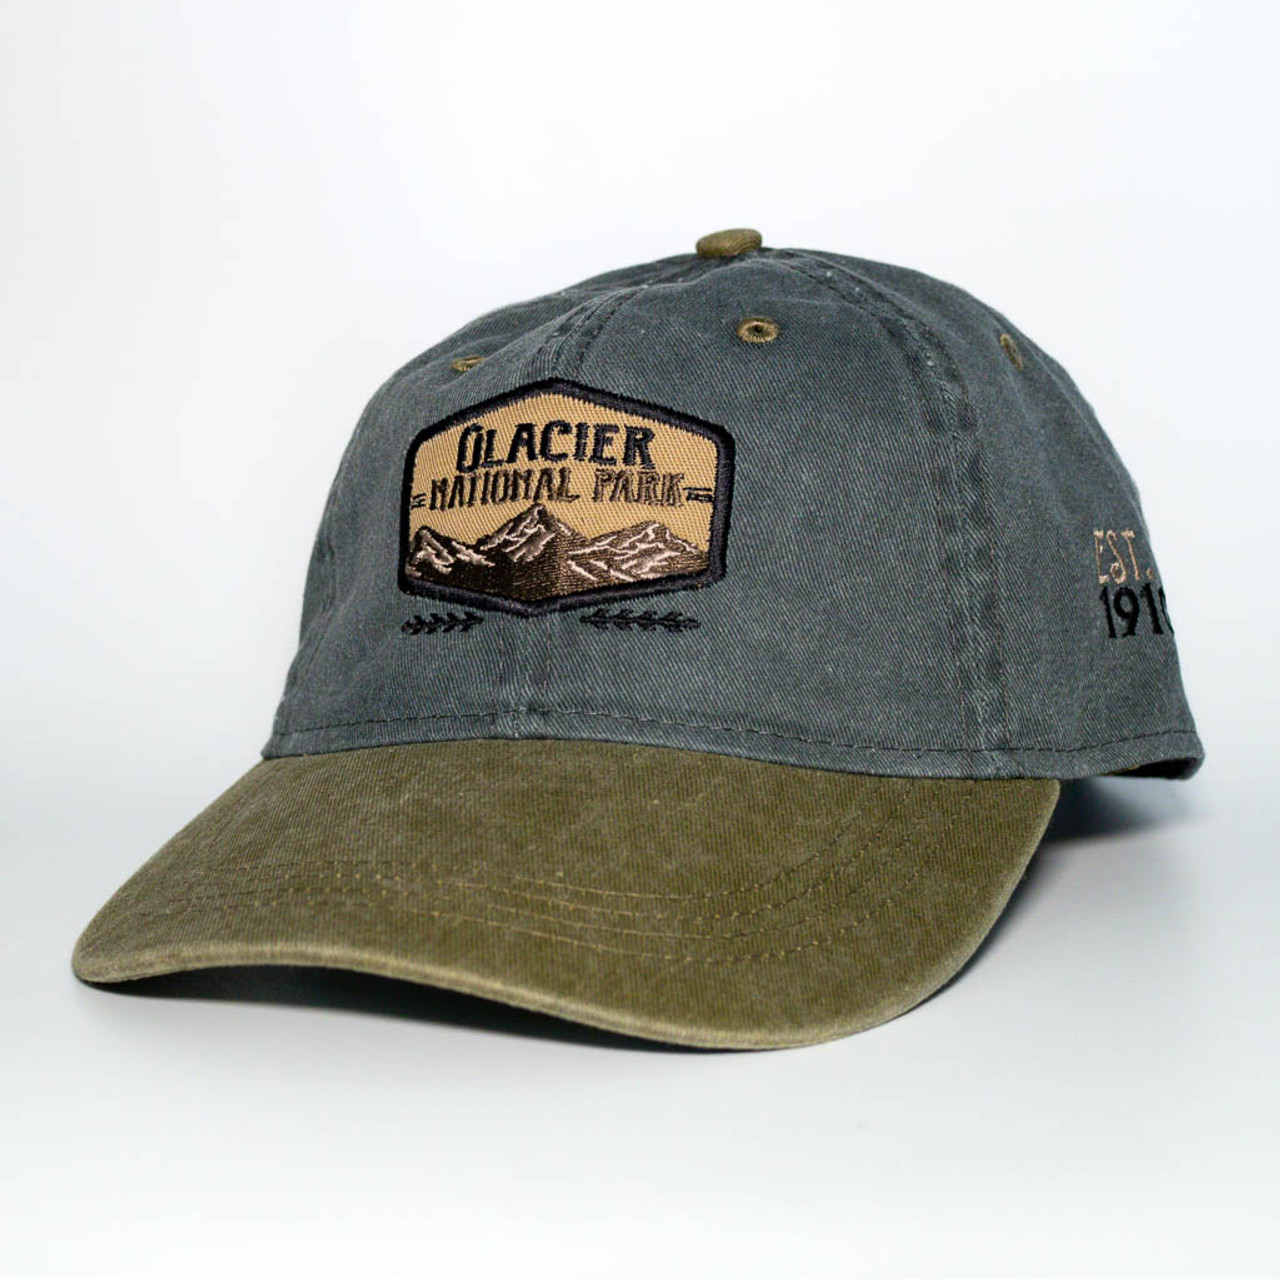 Vintage Two Tone Trucker Cap with patch Glacier Conservancy